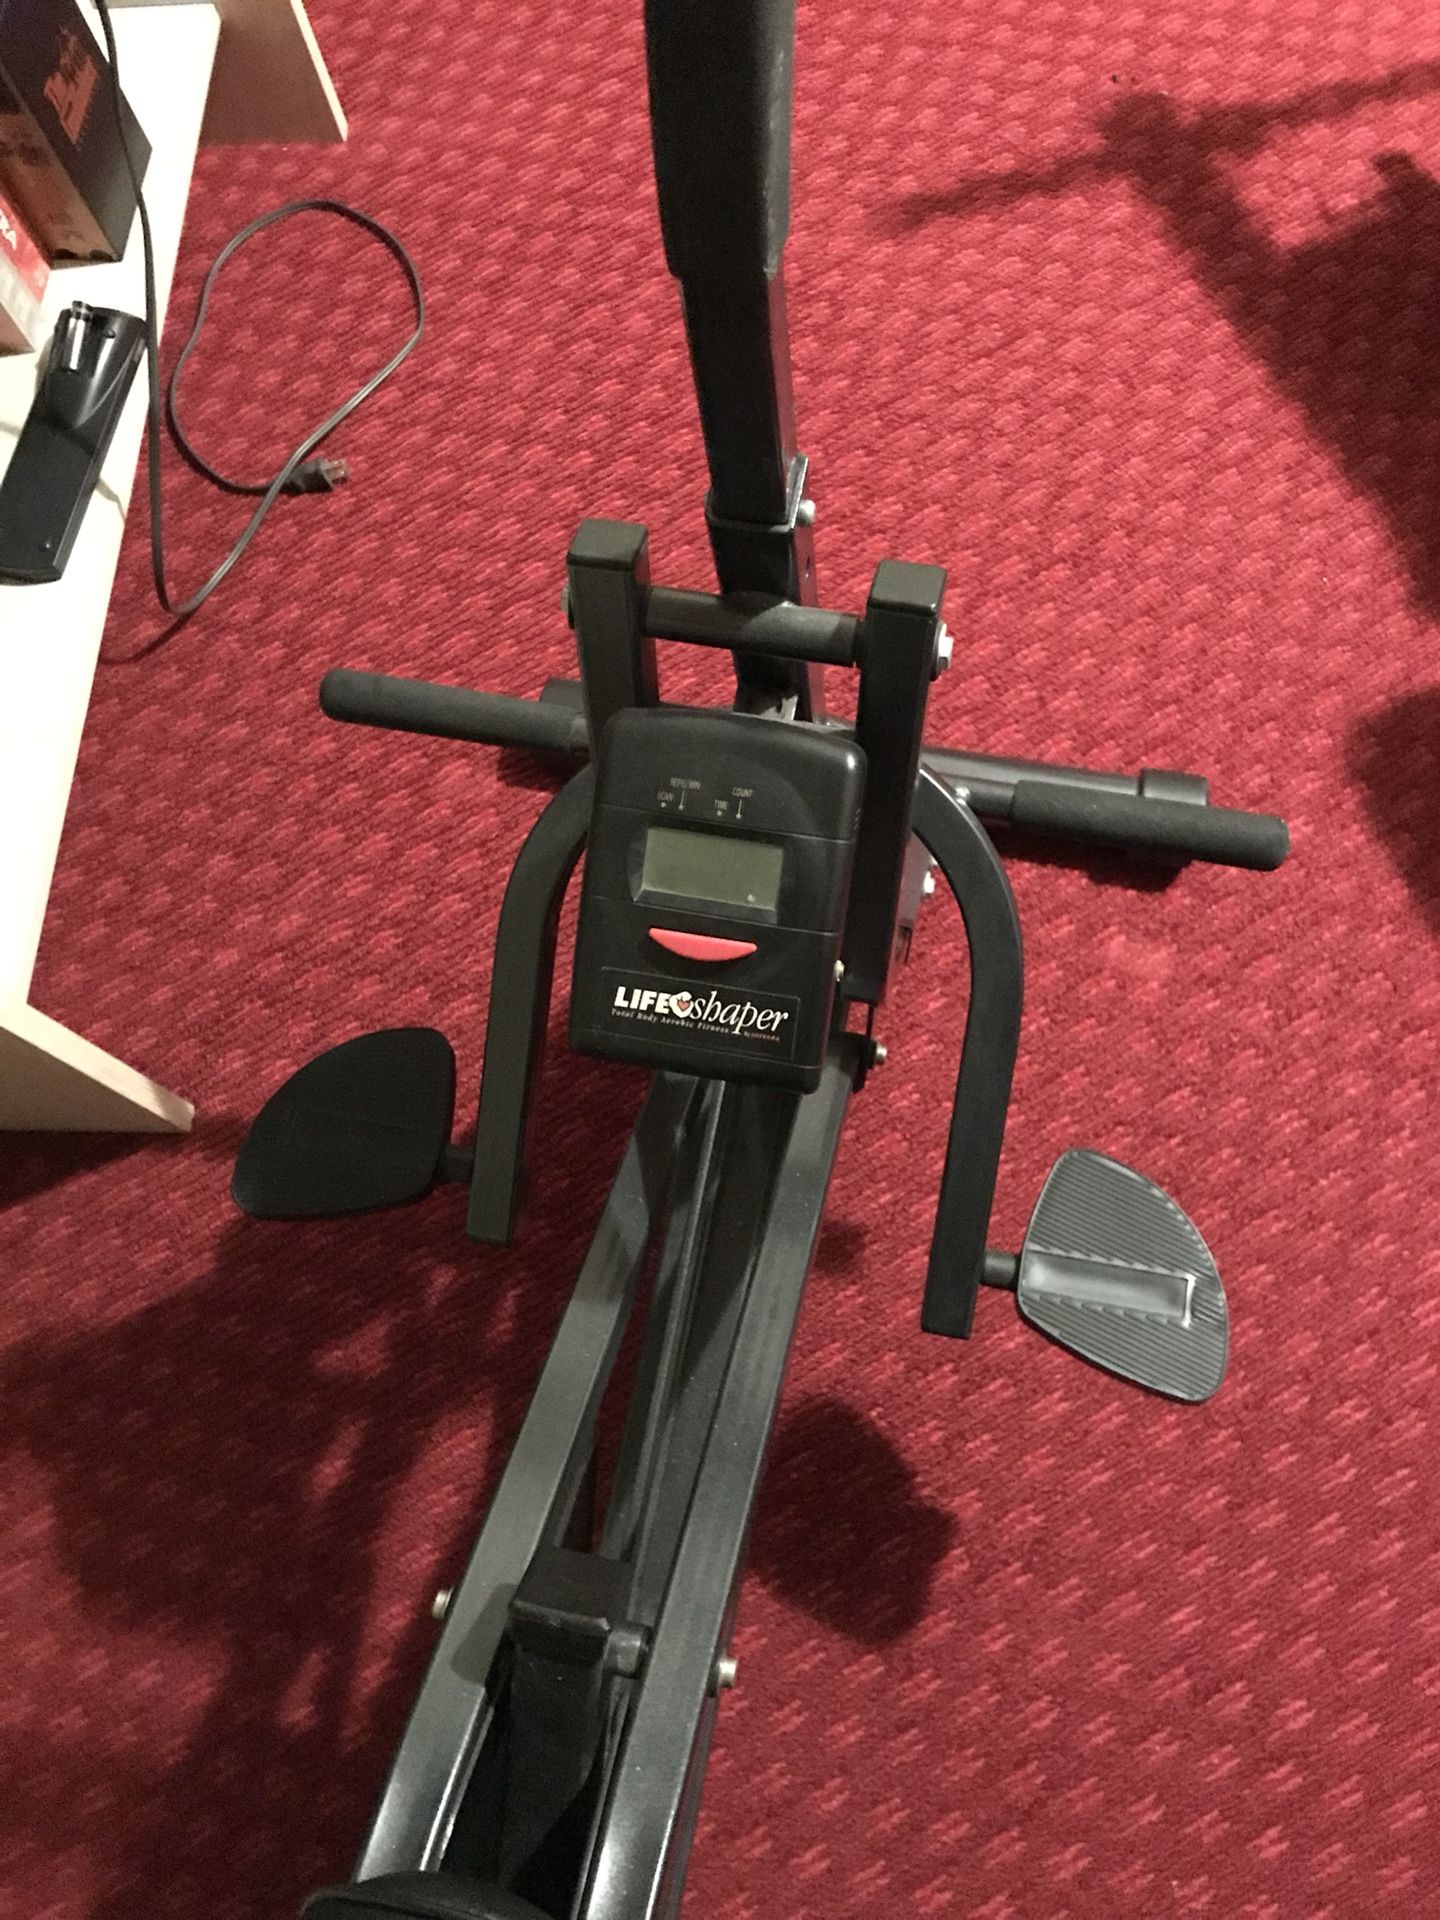 Exercise bike and lift back motion